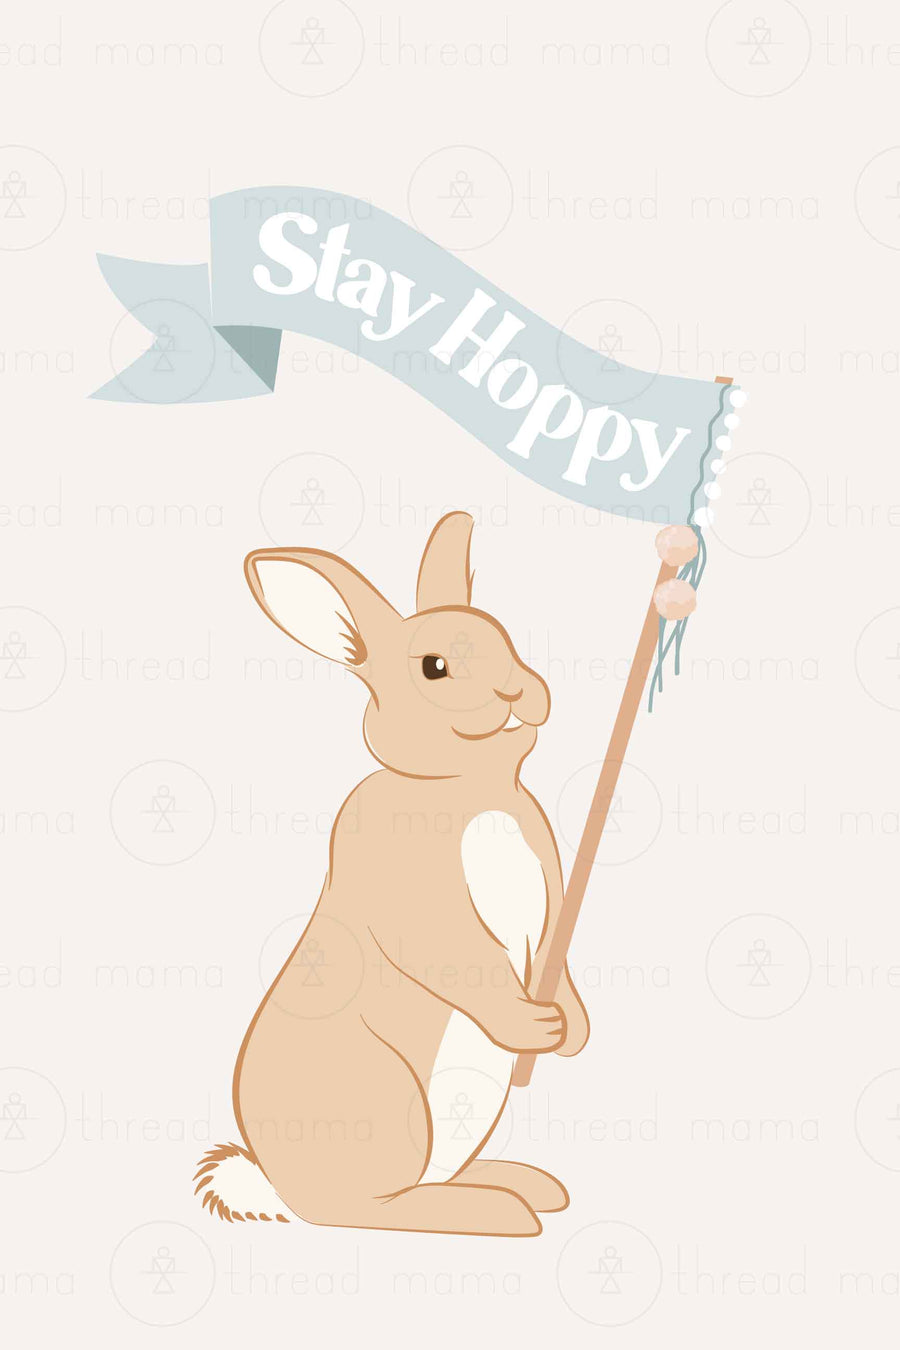 Stay Hoppy (Printable Poster)